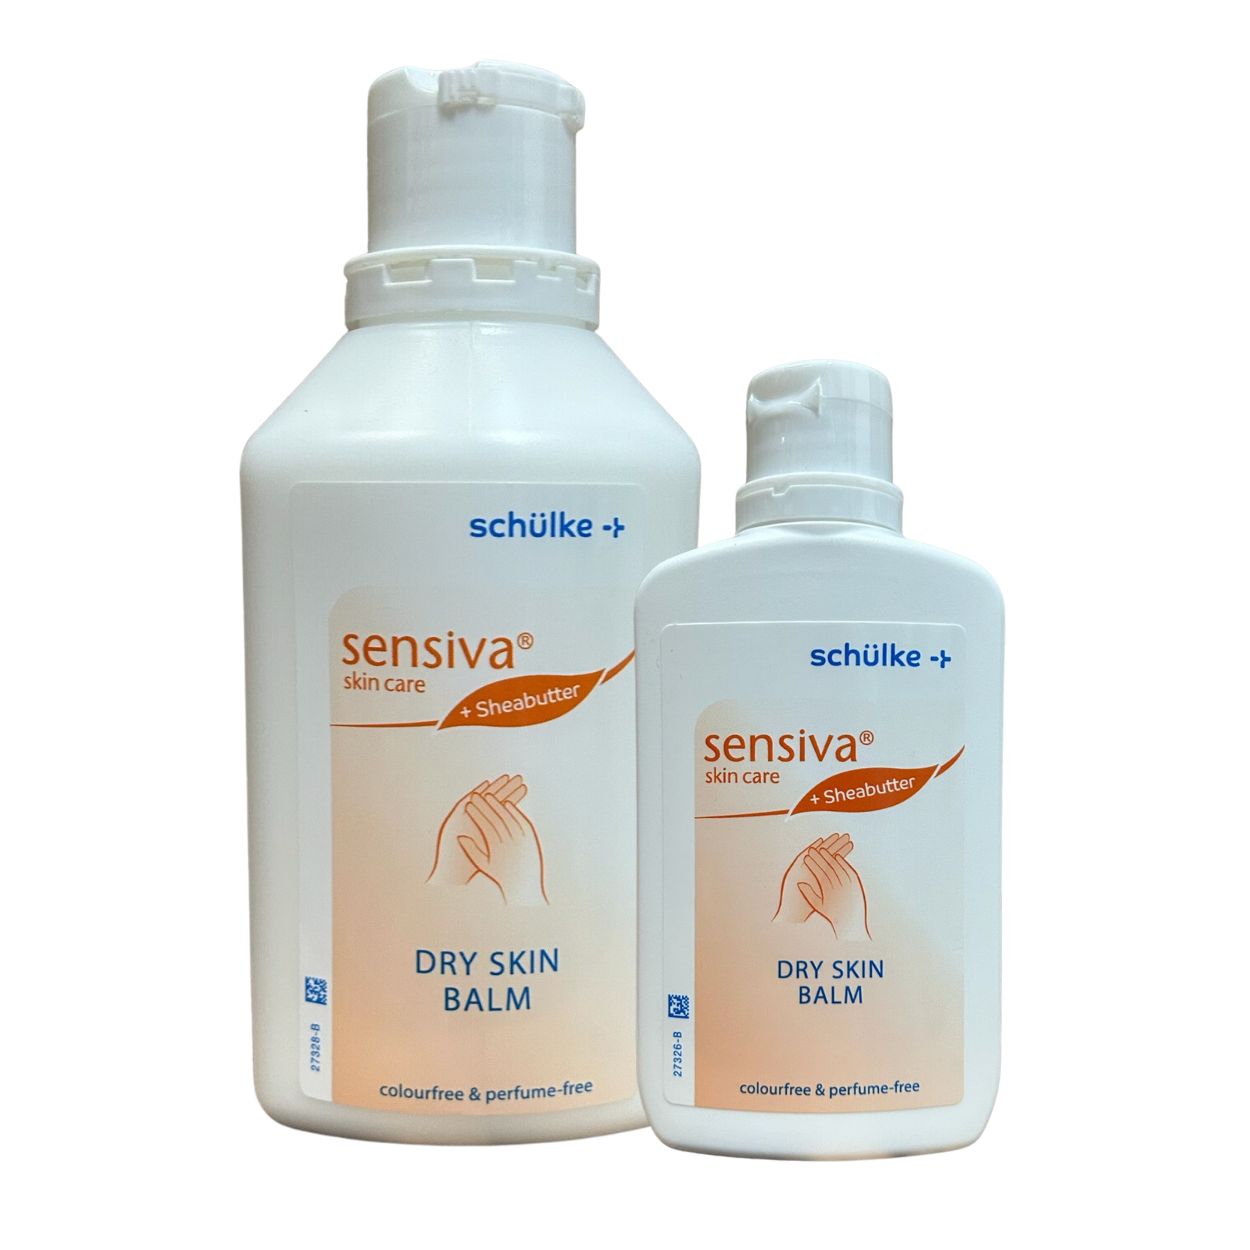 sensiva dry skin balm